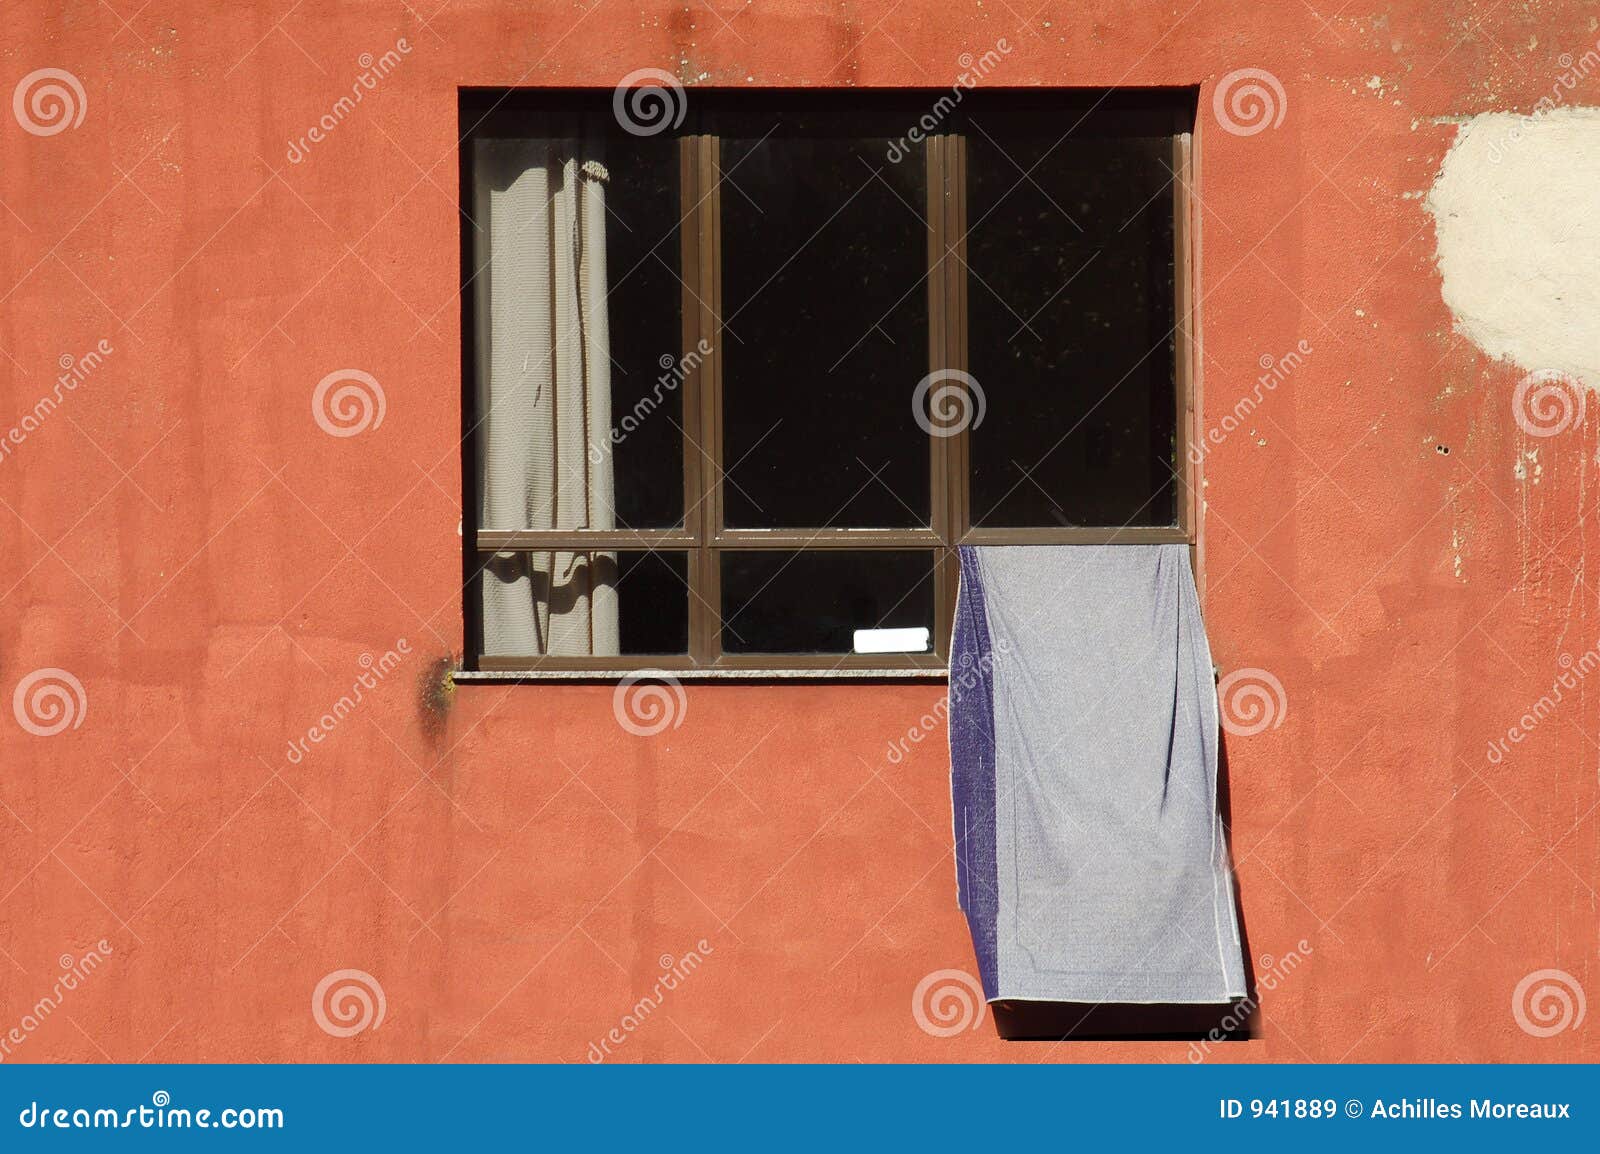 Полотенце окна. Полотенце для окон. Полотенца сушатся на окне. Полотенце висит на окне. Полотенца сушатся за окном.